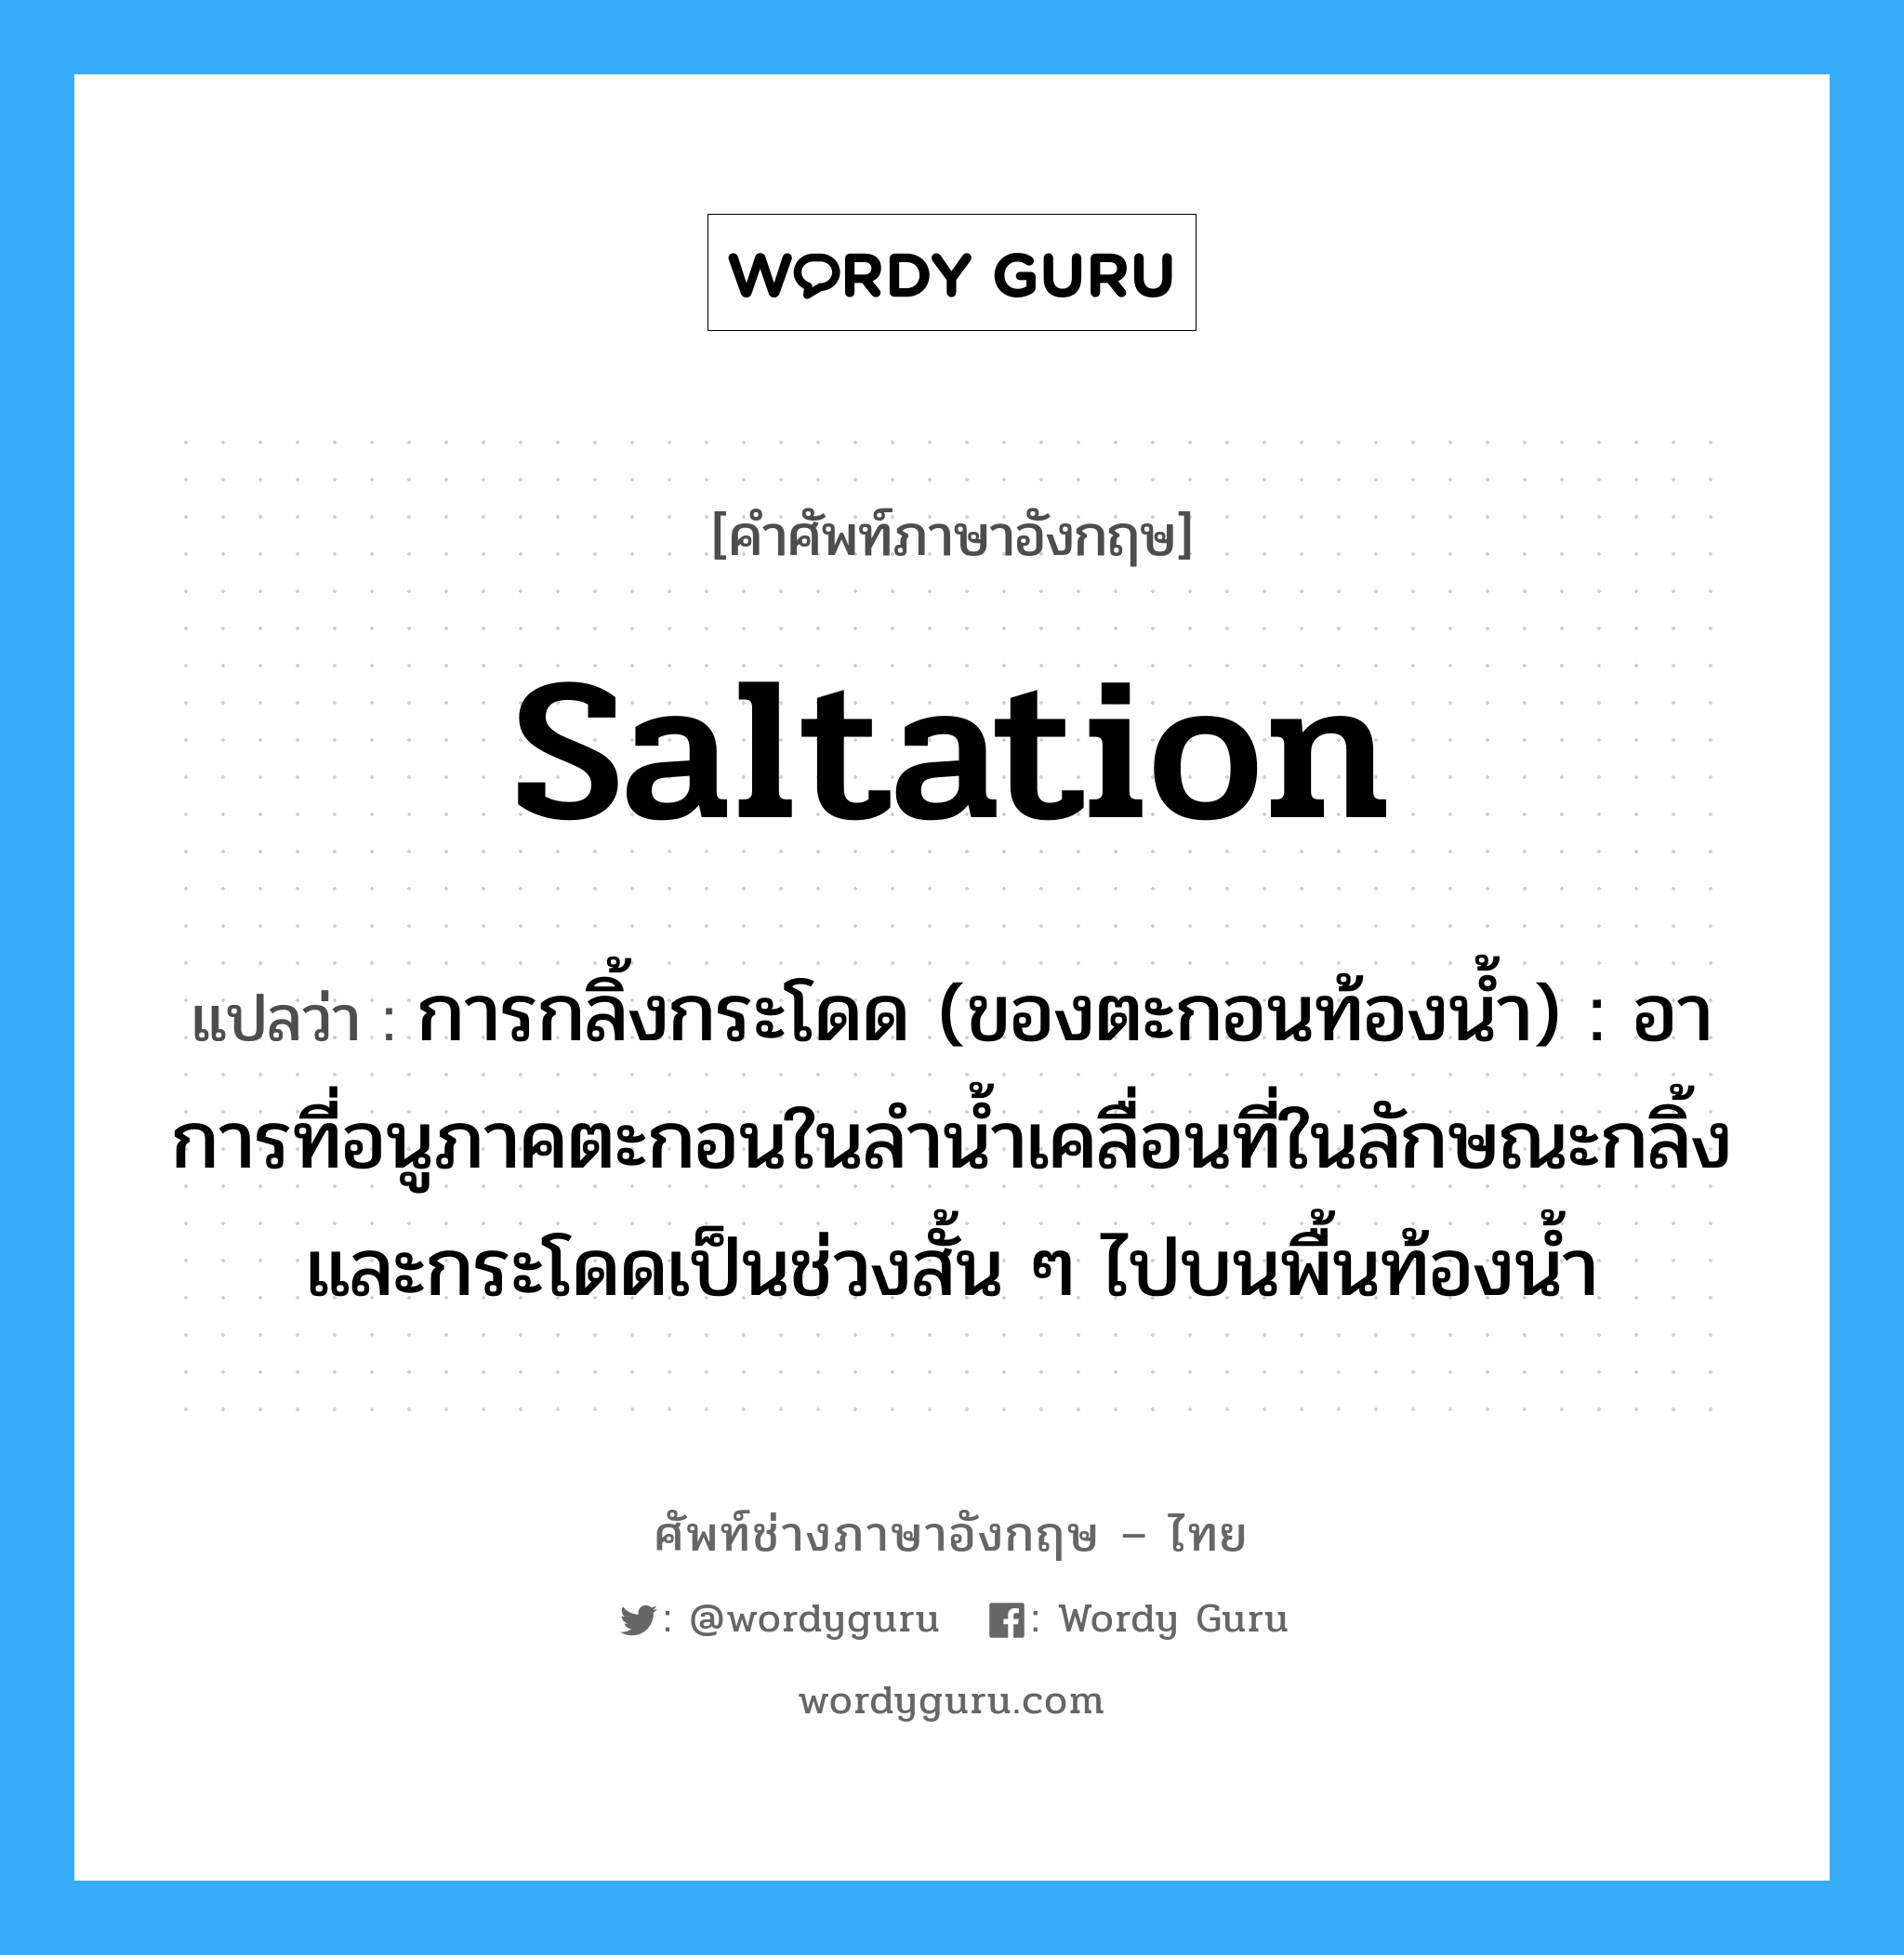 saltation แปลว่า?, คำศัพท์ช่างภาษาอังกฤษ - ไทย saltation คำศัพท์ภาษาอังกฤษ saltation แปลว่า การกลิ้งกระโดด (ของตะกอนท้องน้ำ) : อาการที่อนูภาคตะกอนในลำน้ำเคลื่อนที่ในลักษณะกลิ้งและกระโดดเป็นช่วงสั้น ๆ ไปบนพื้นท้องน้ำ